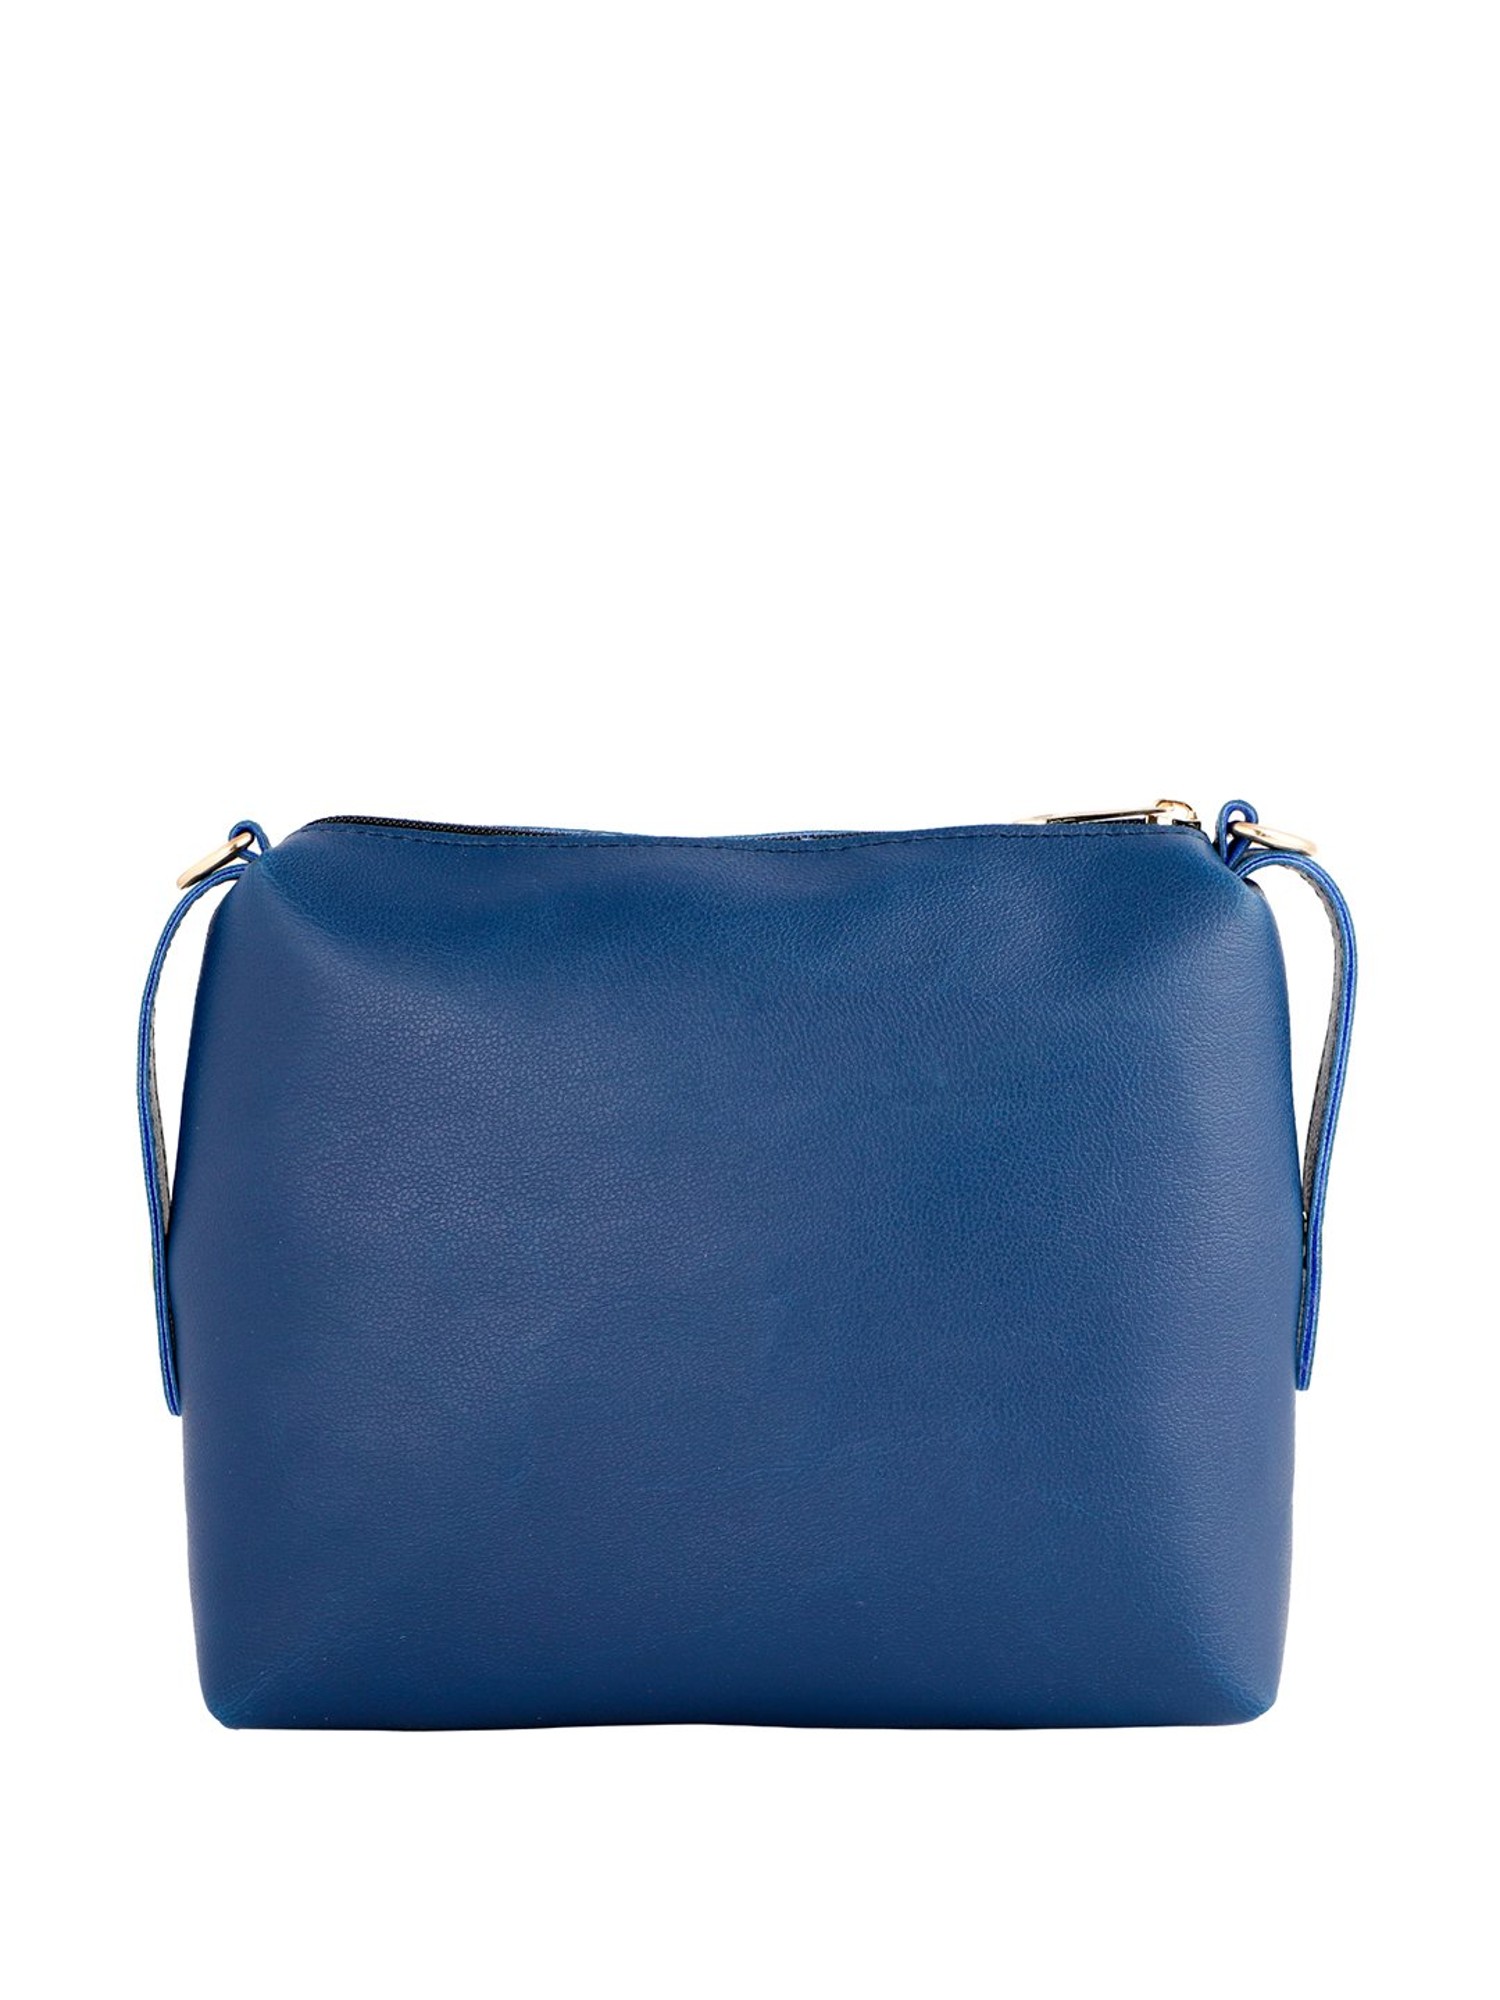 Crossbody Handbag Italian Leather Royal Blue